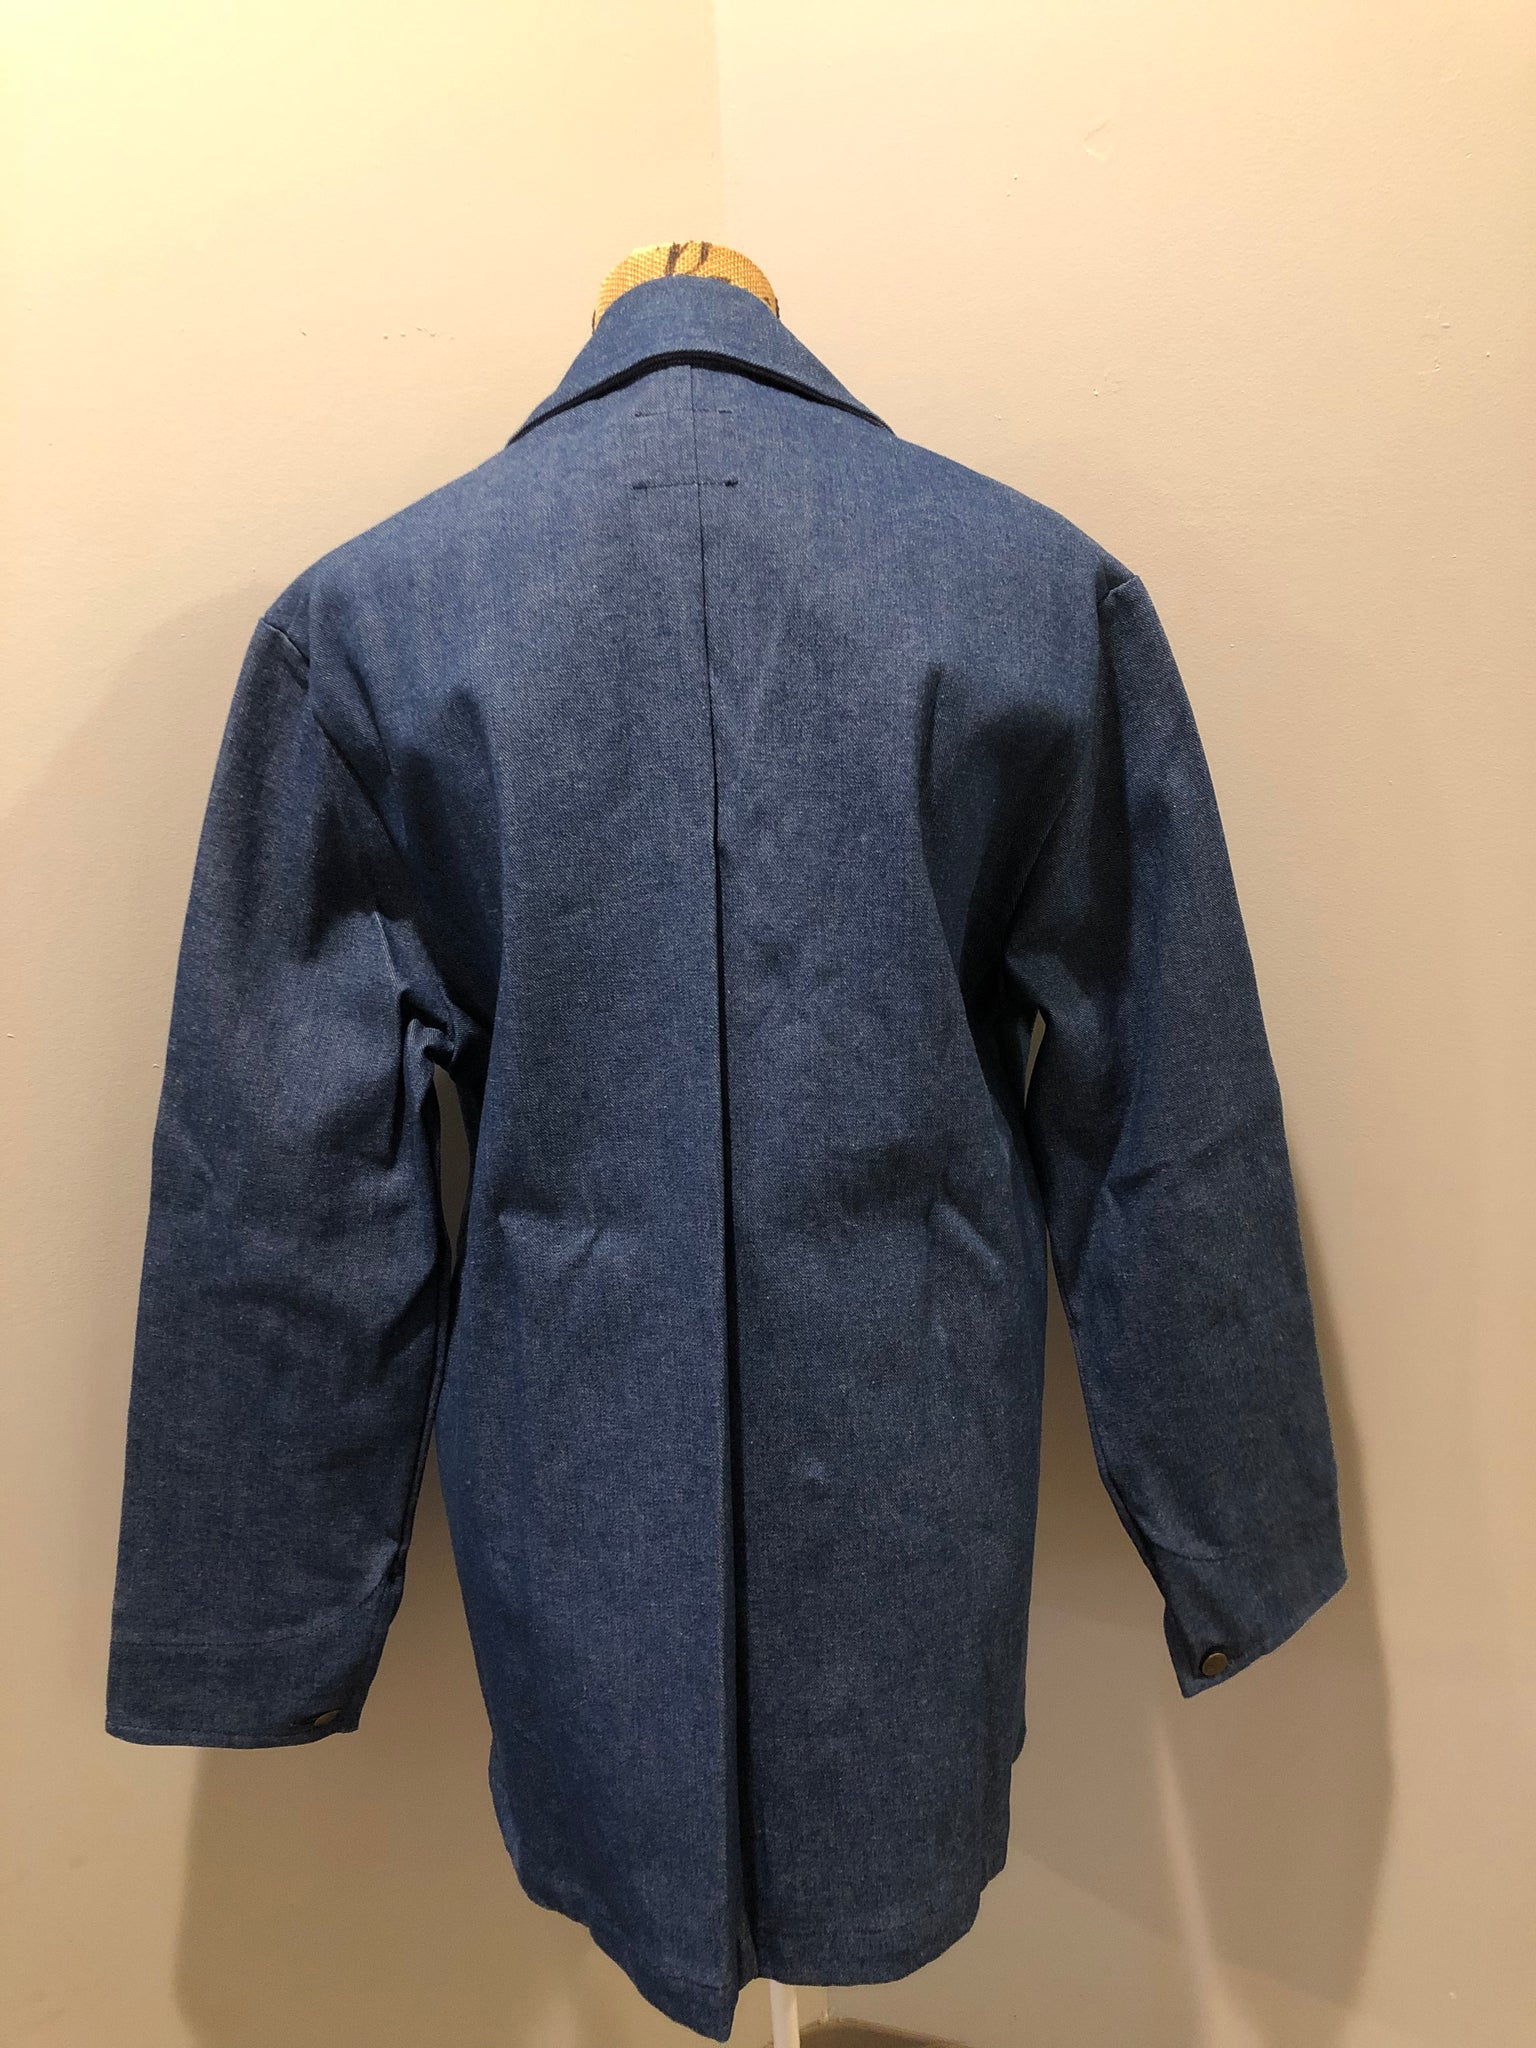 Vintage Hammill Medium Wash Denim Jacket, Made in Canada